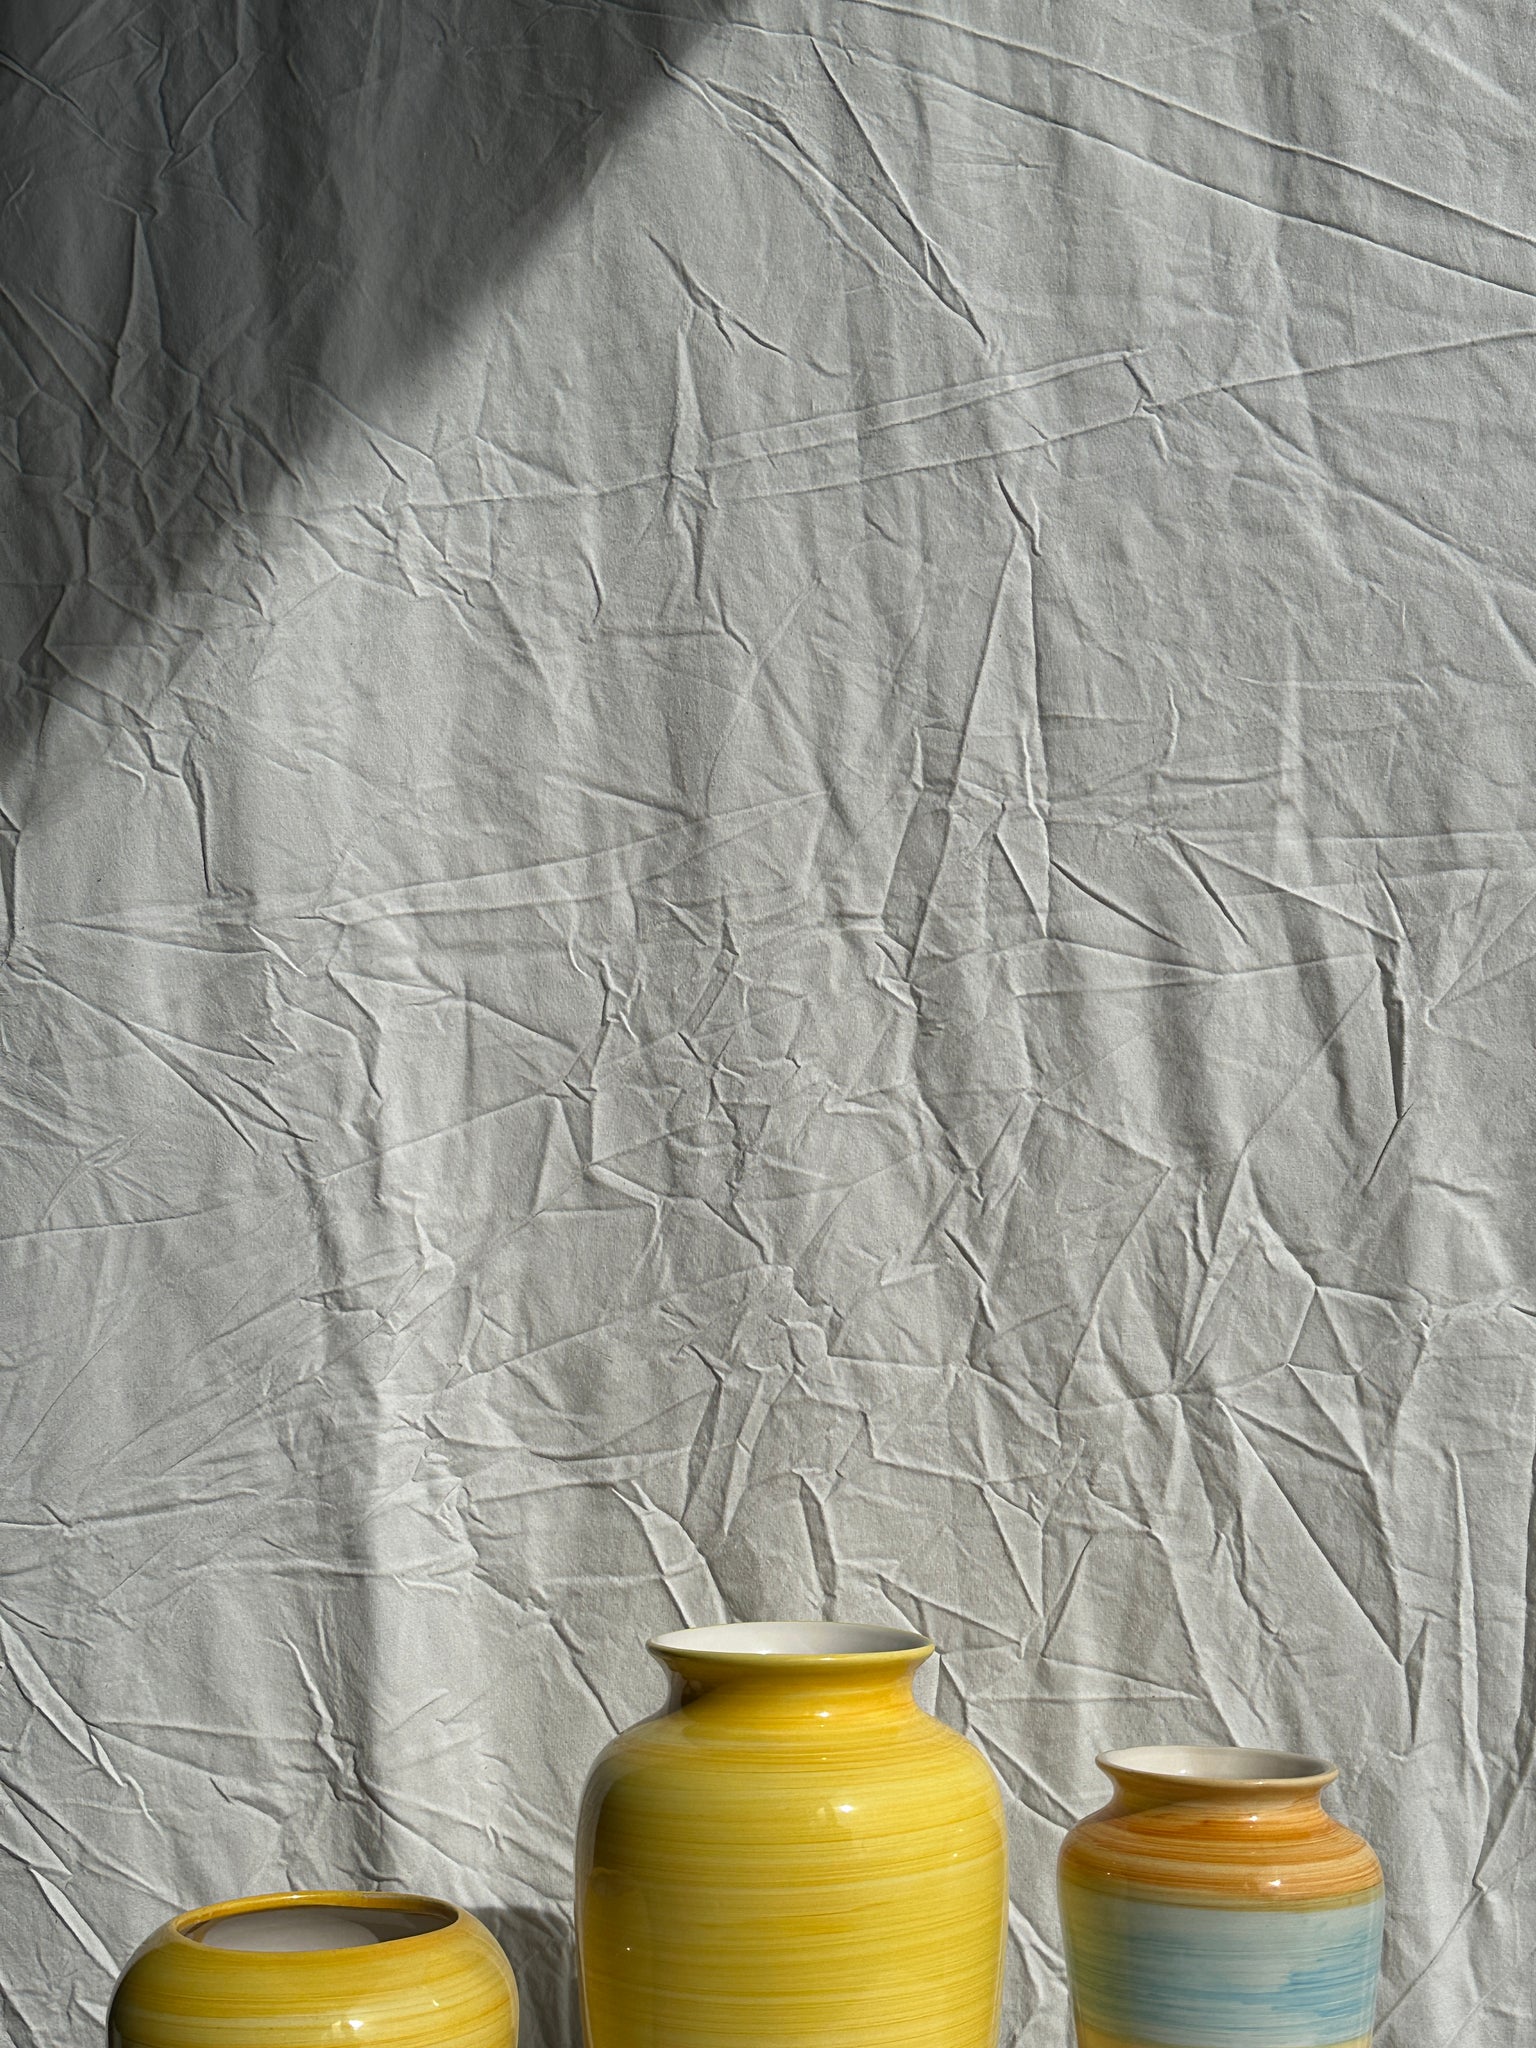 Grand vase jaune années 90